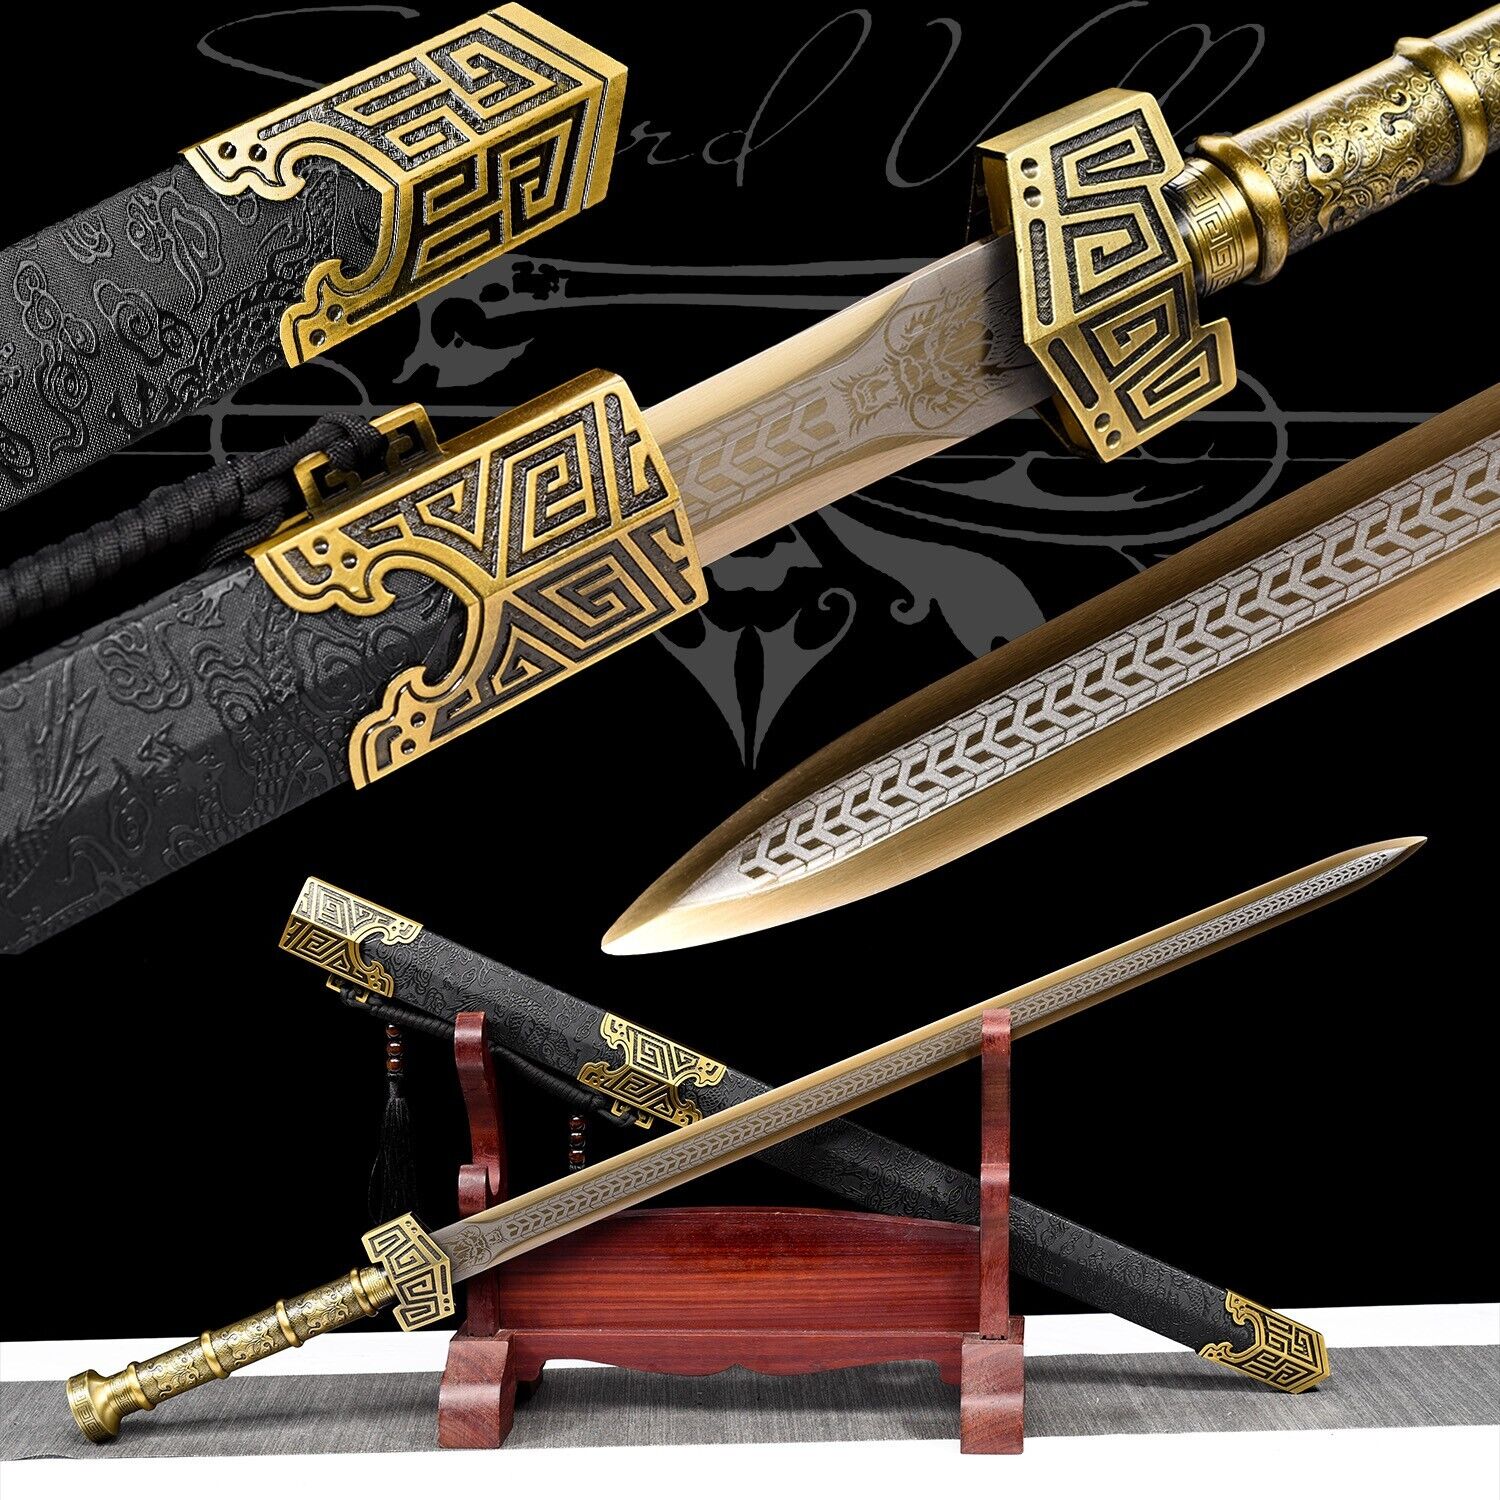 Handmade Sword/Manganese Steel/High-Quality Blade/Collectible/Combat Sword